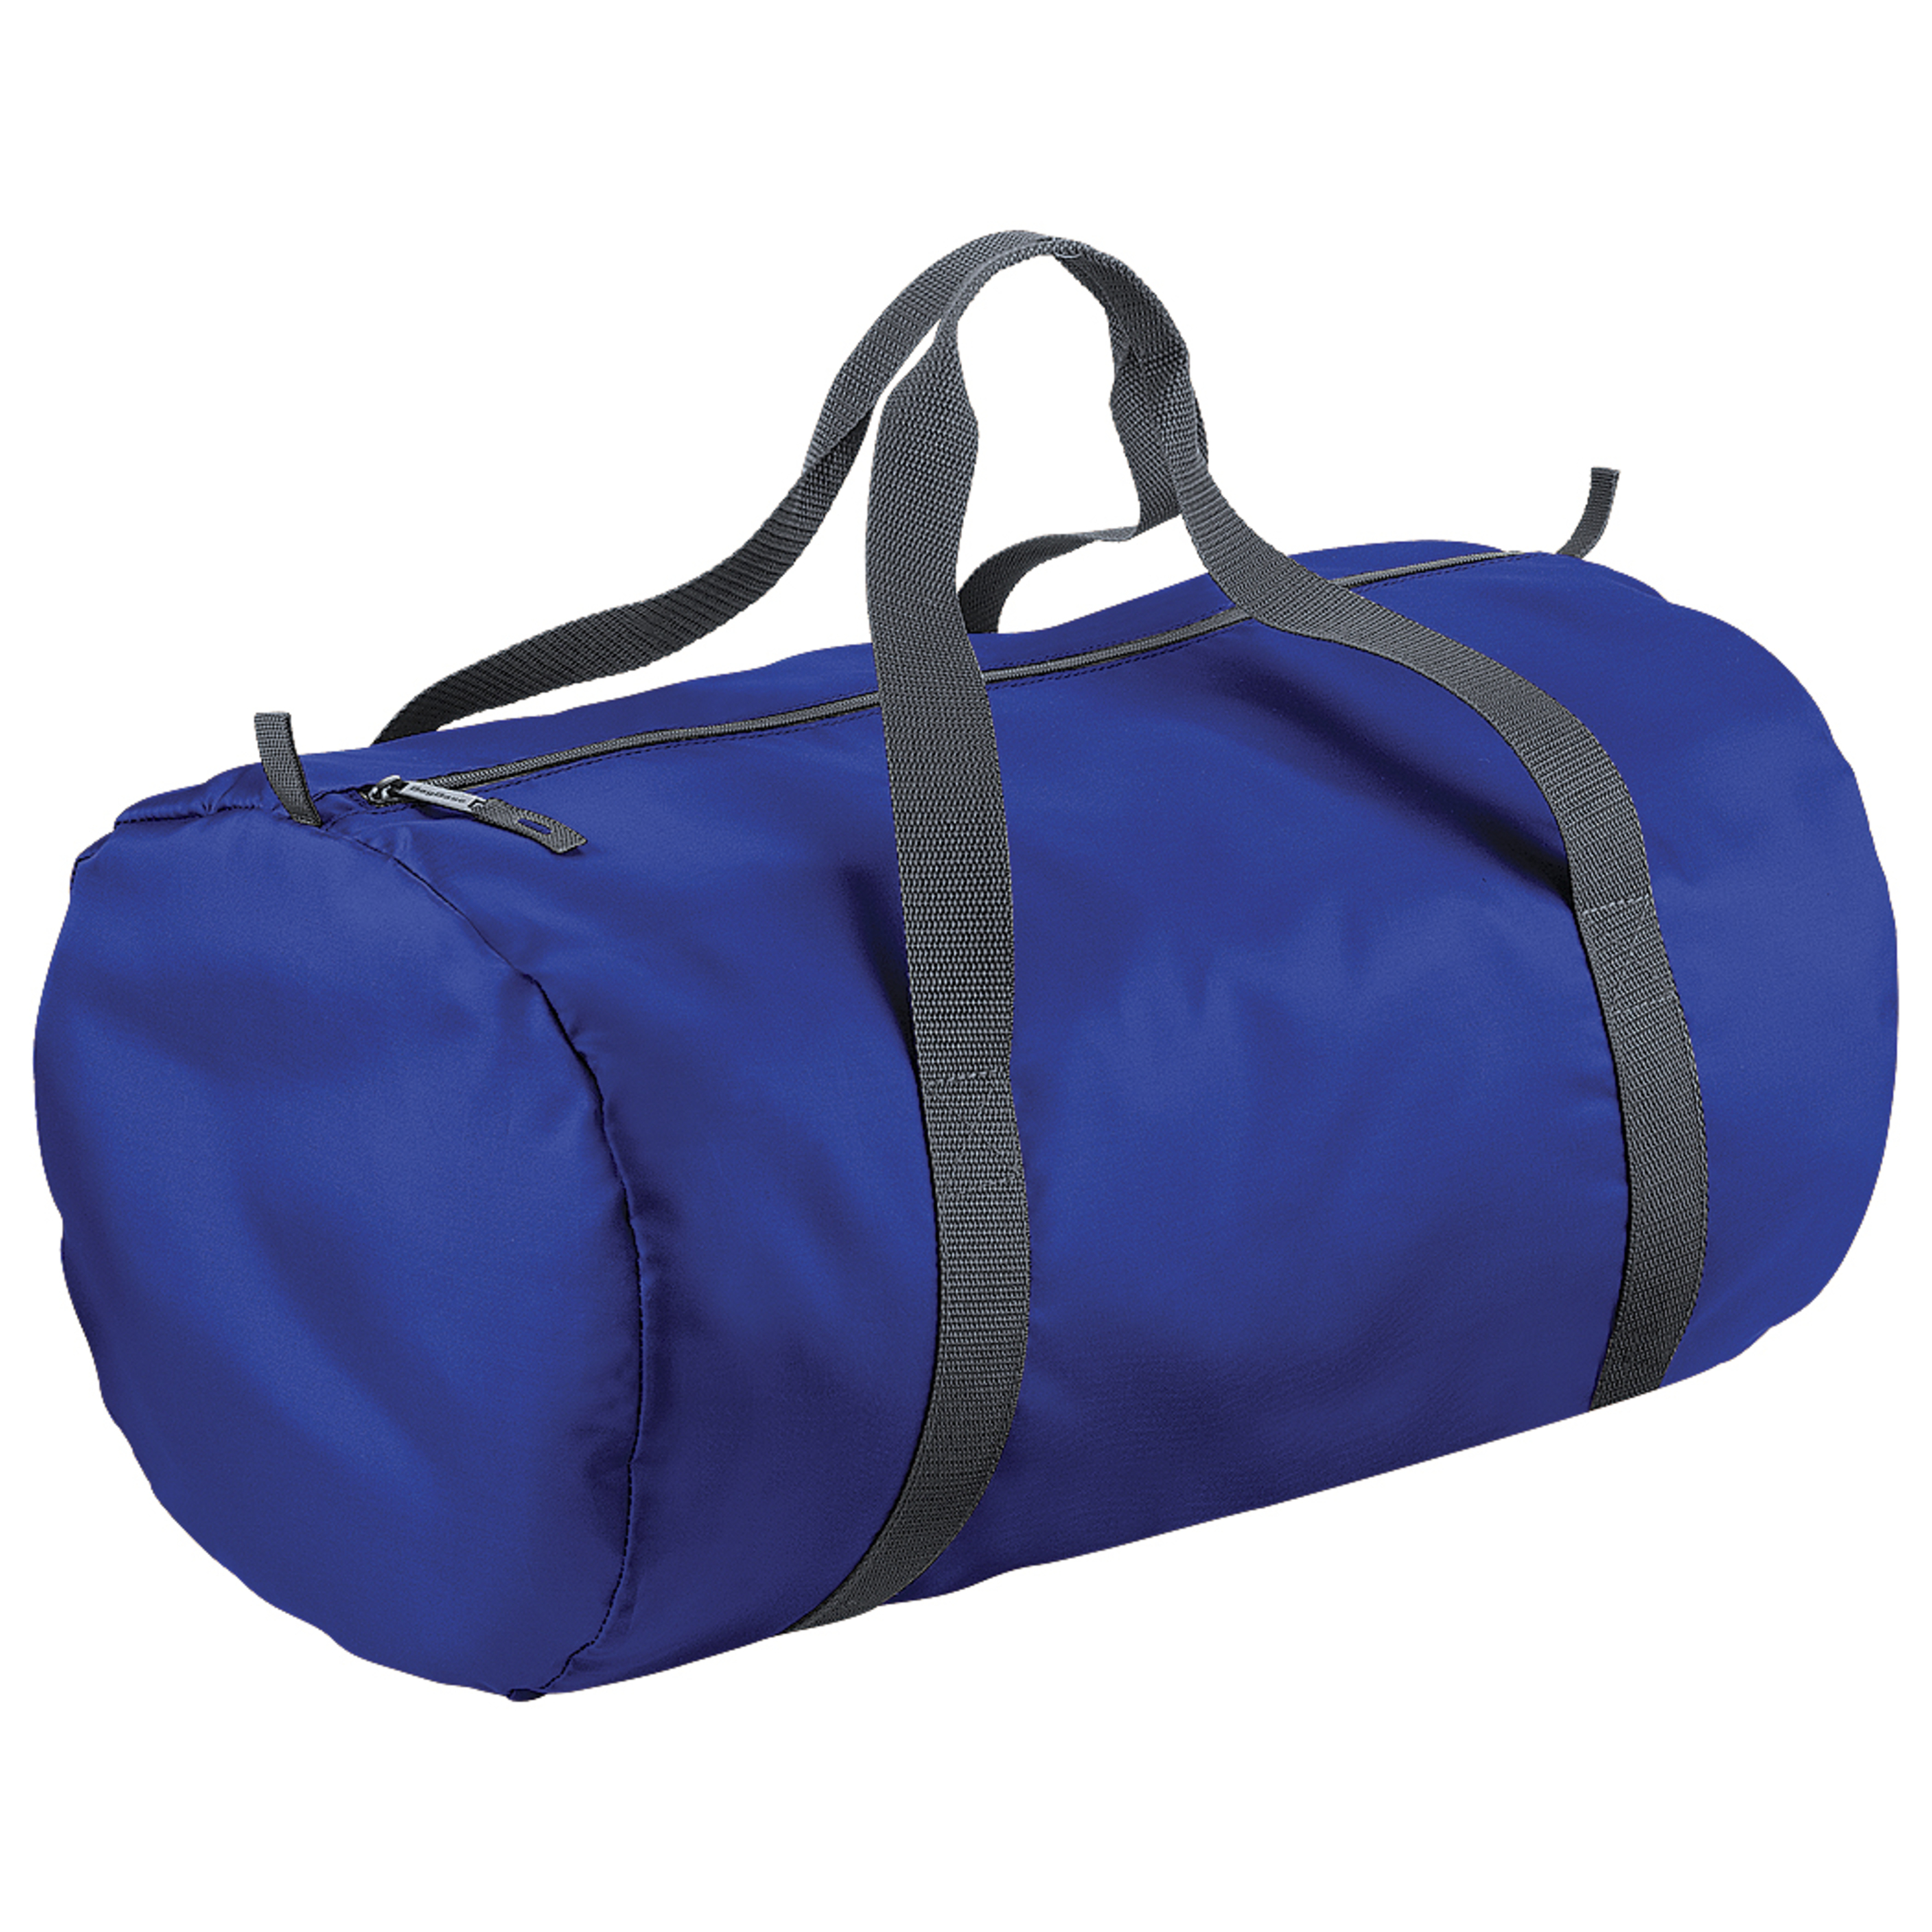 Bolsa De Deporte / De Viaje Impermeable Modelo Barrel Packaway (32 Litros) Bagbase (Azul)